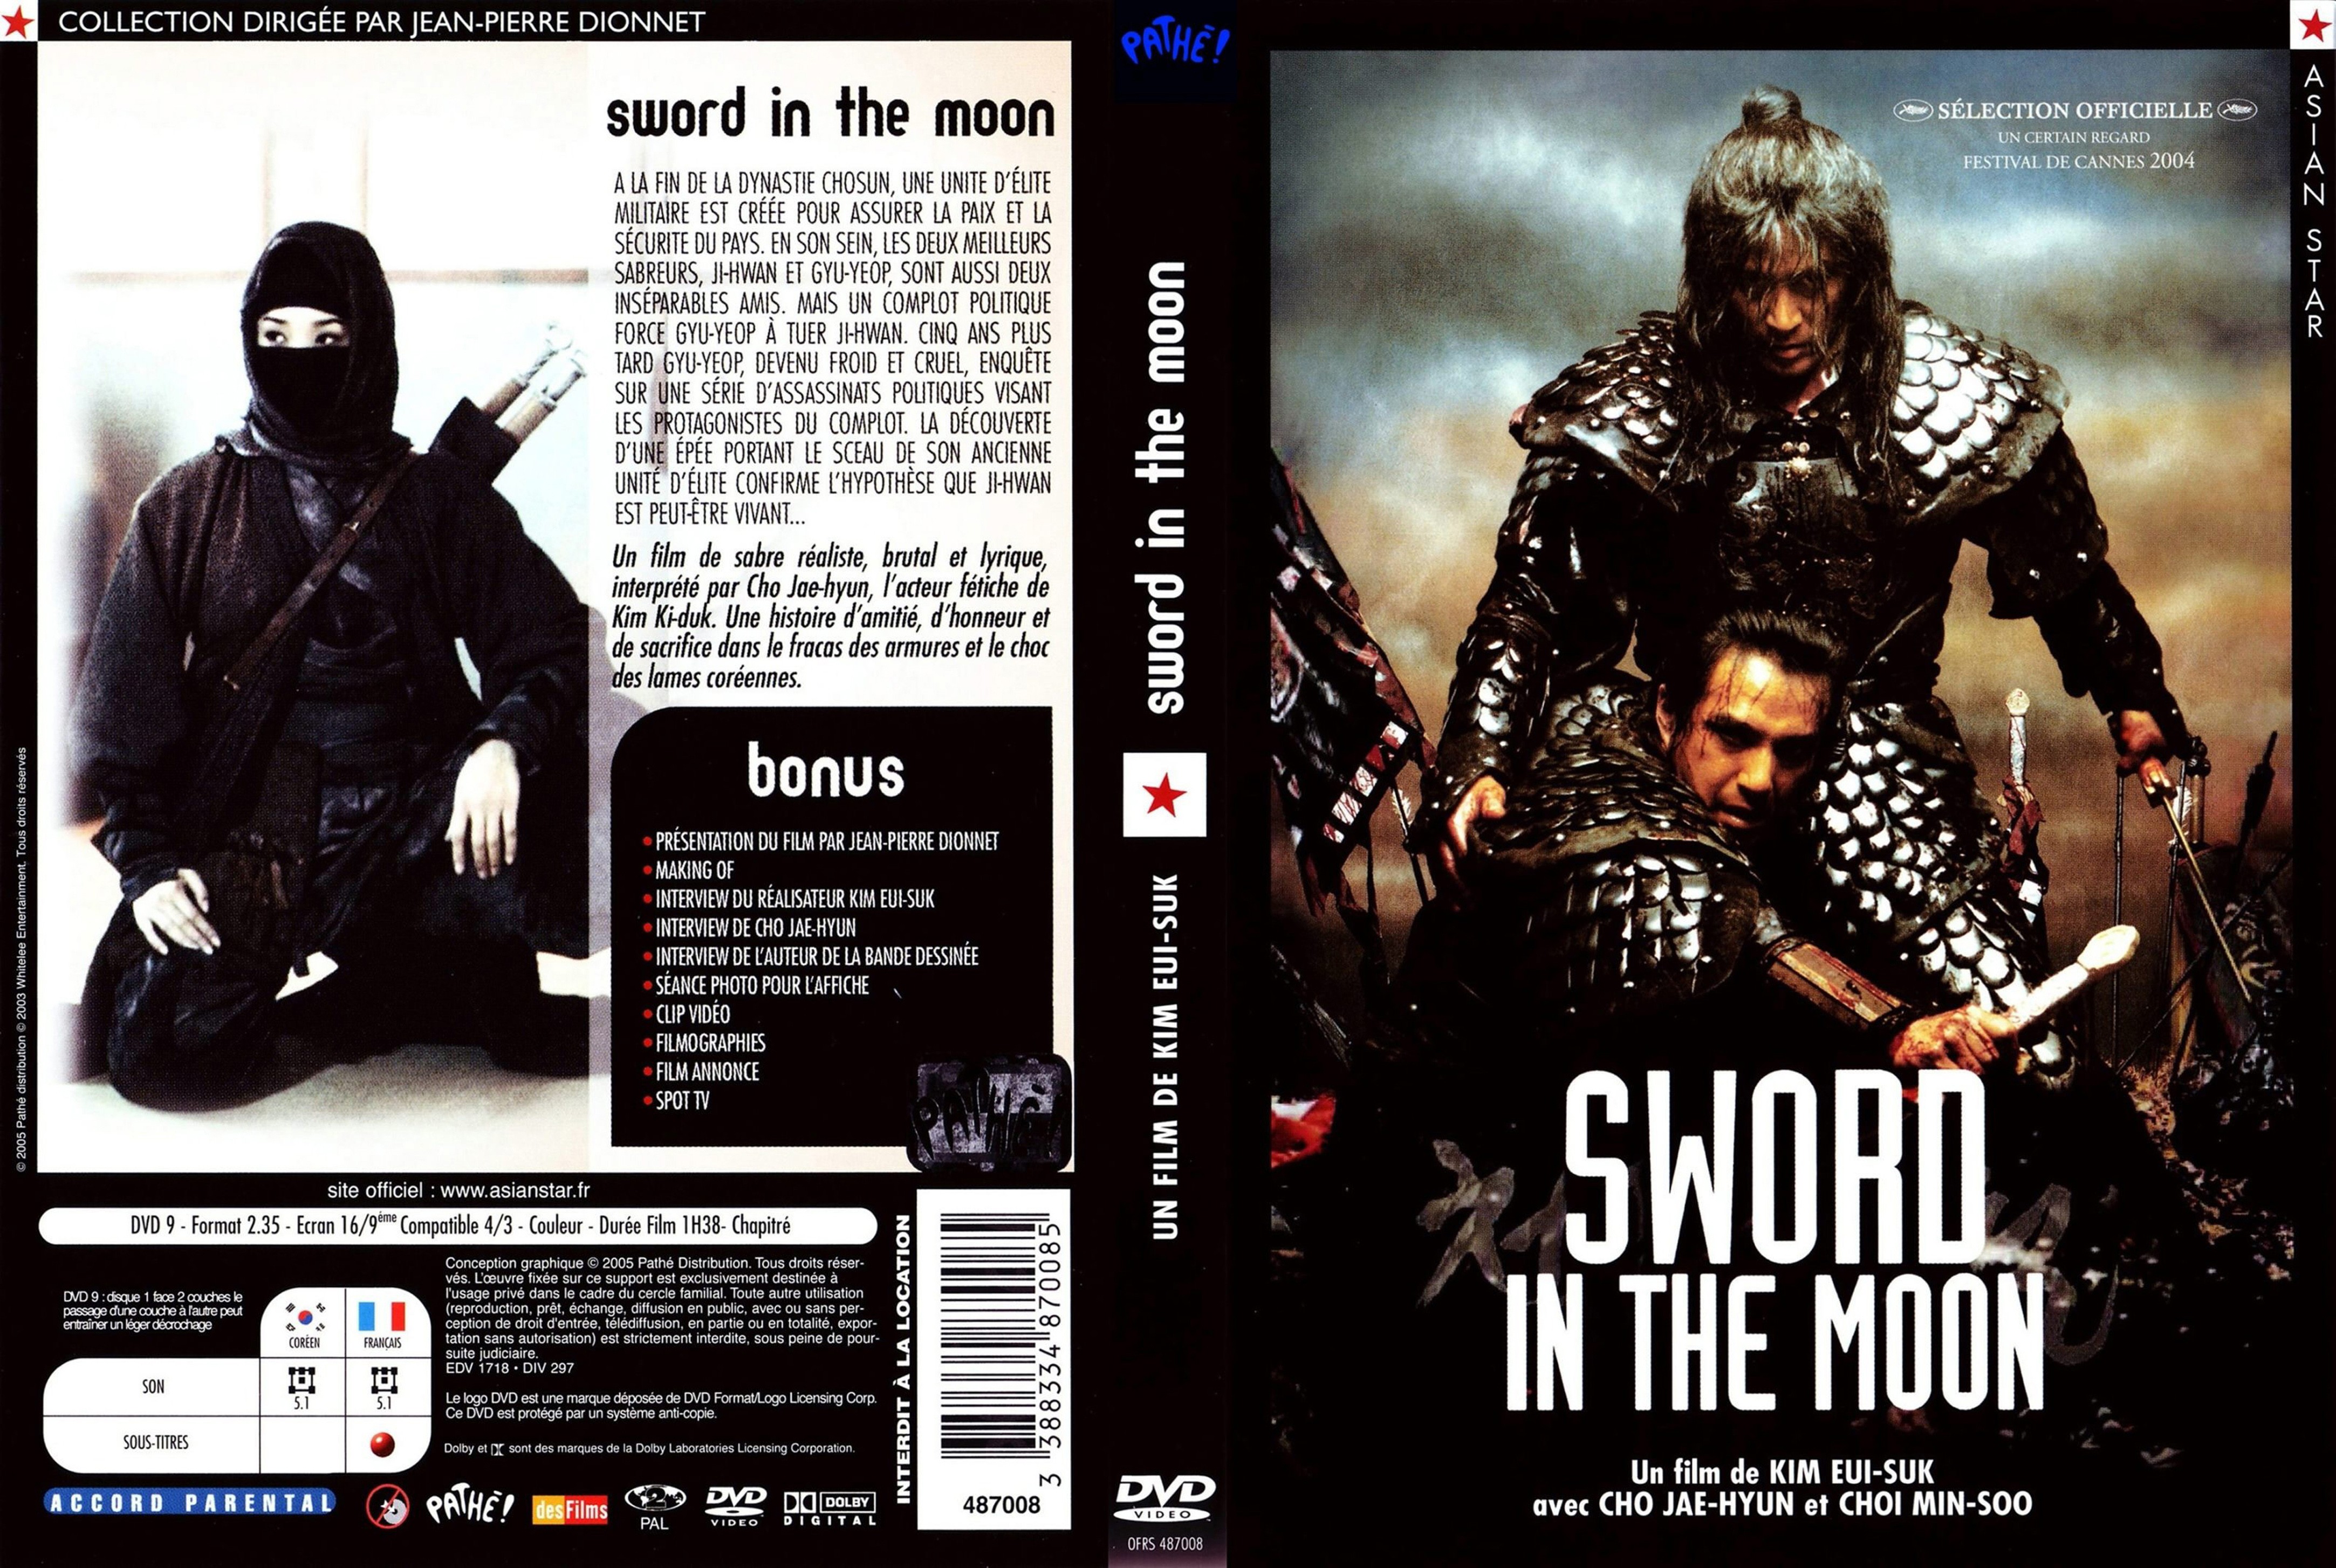 Jaquette DVD Sword in the moon